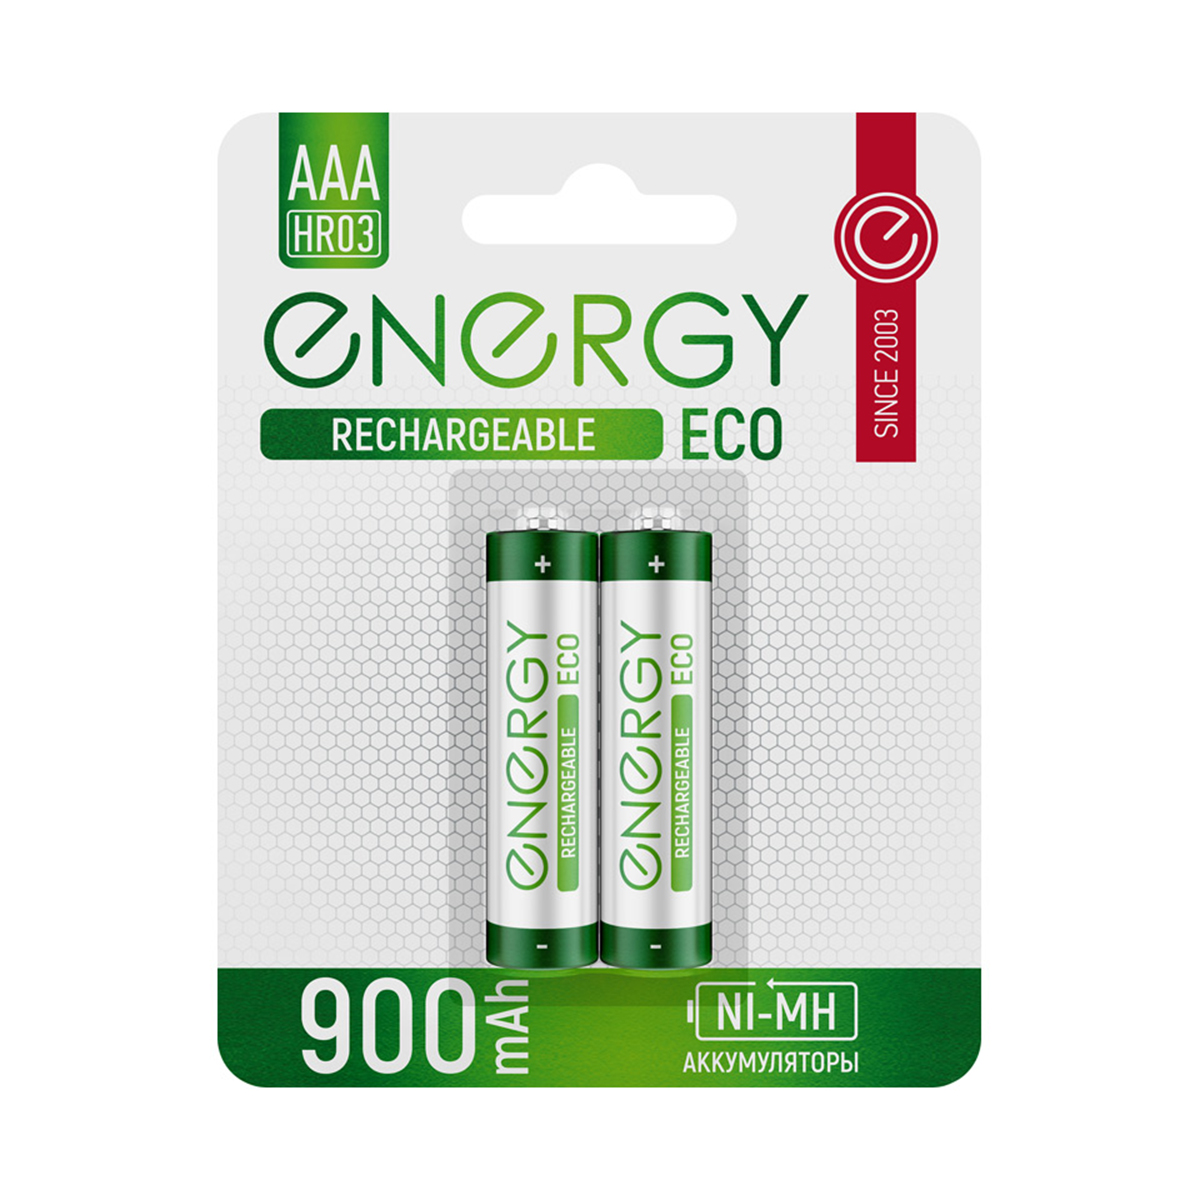 Аккумулятор eco nimh-900-hr03/2b тип ааа (2 шт. в блистере) (1/12/144) "energy"